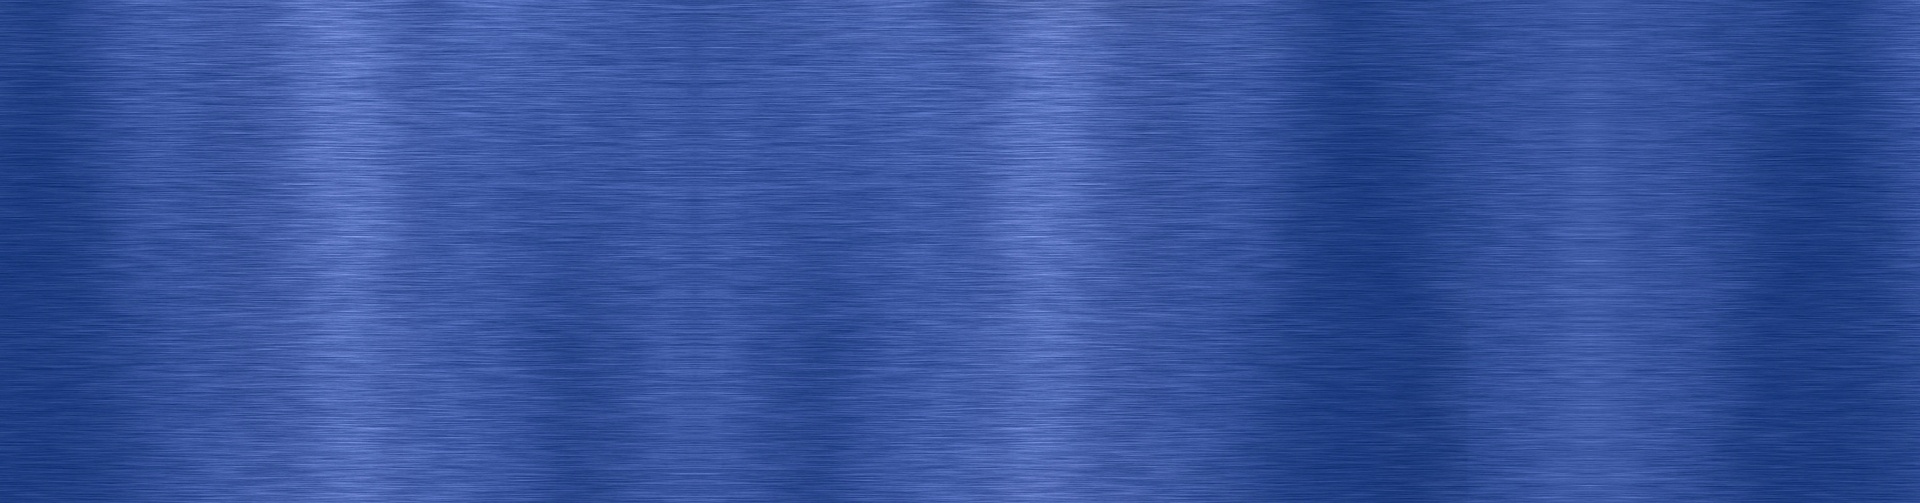 Blue Metal Banner Texture